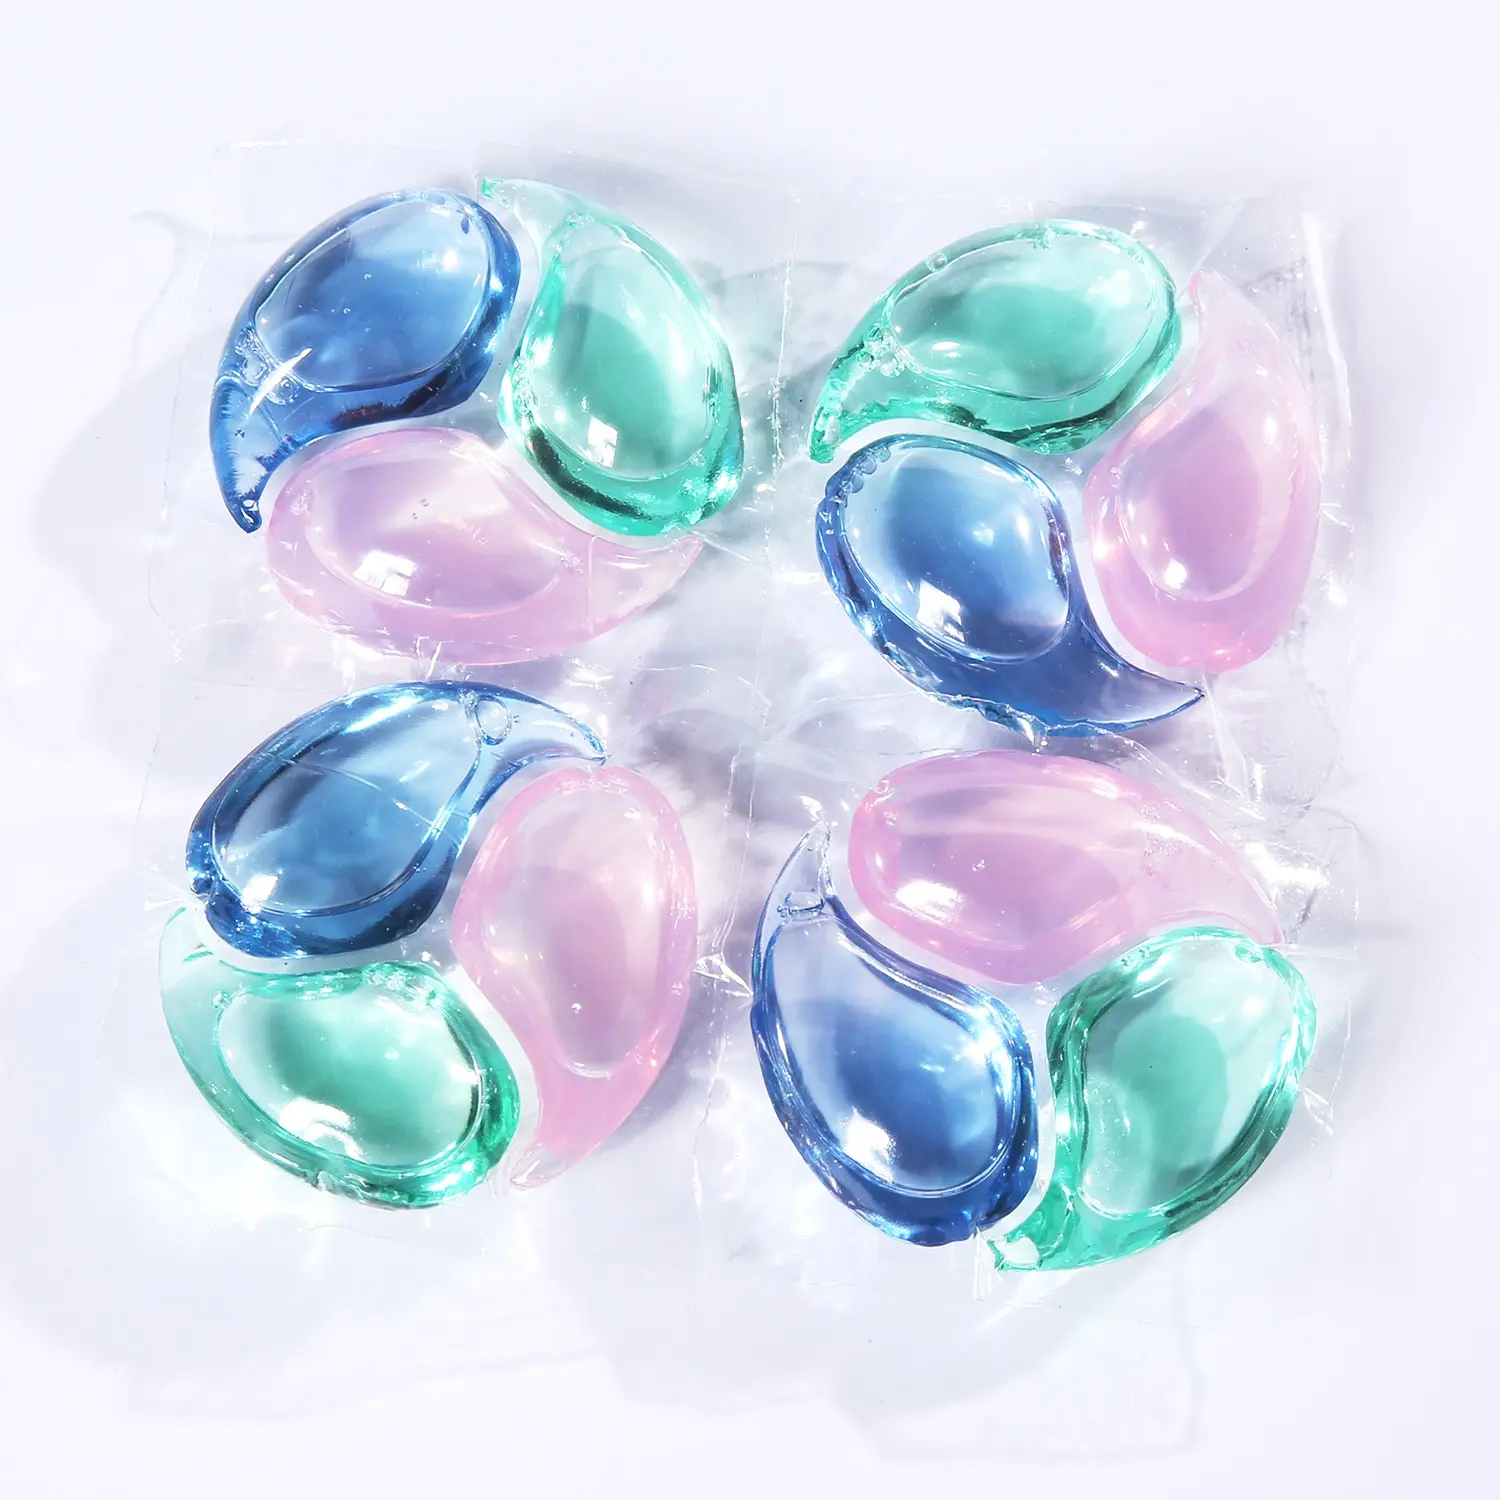 Laundry Gel Ball Fragrance Best販売者Liquid Laundry Capules Laundry Gel Detergent Washing Pods Soluble Film